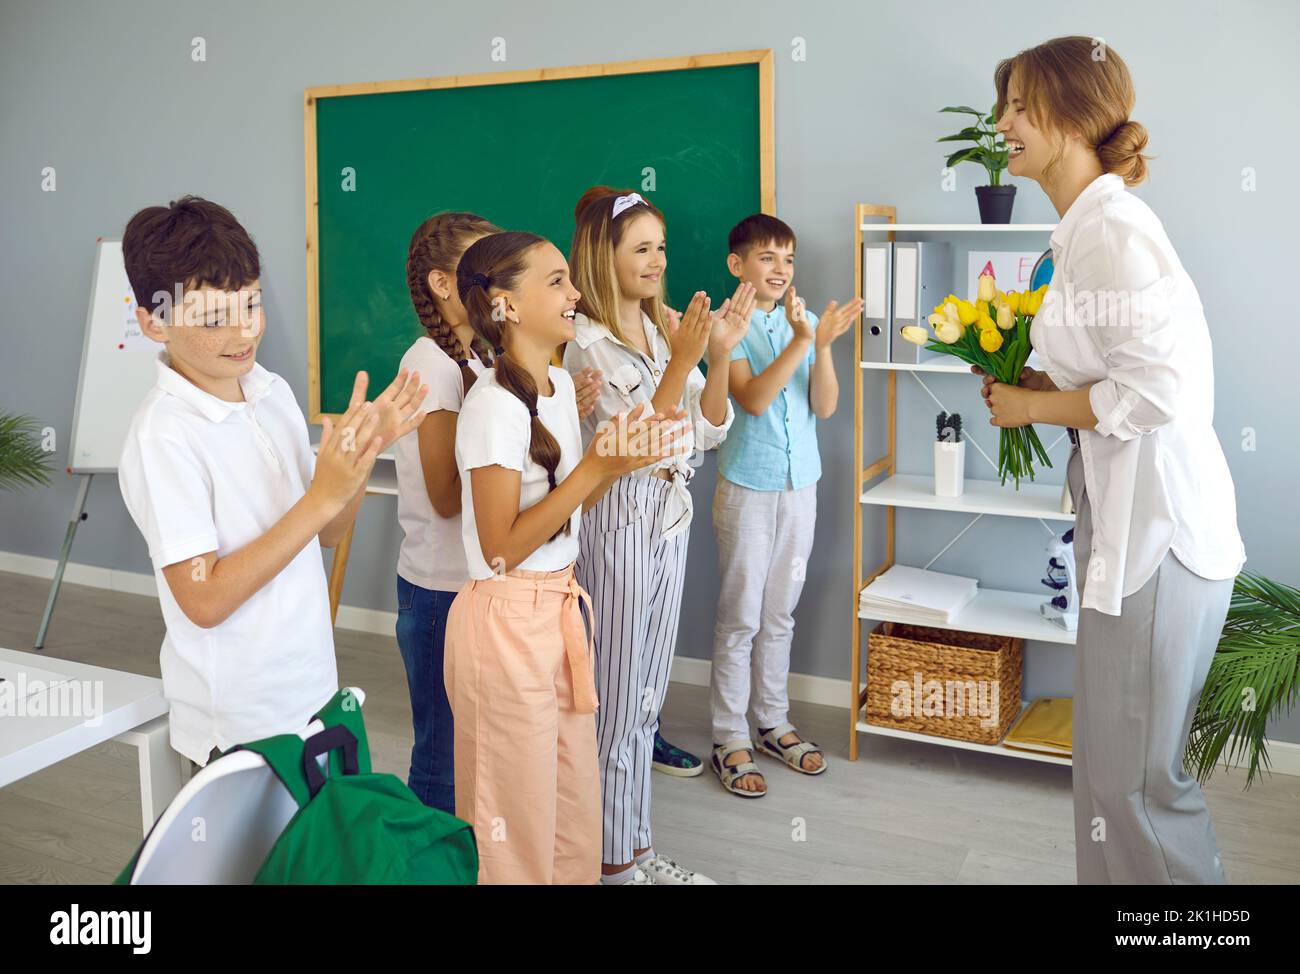 Cheerful schoolchildren in school congratulate their female teacher on International Teacher's Day. Stock Photo